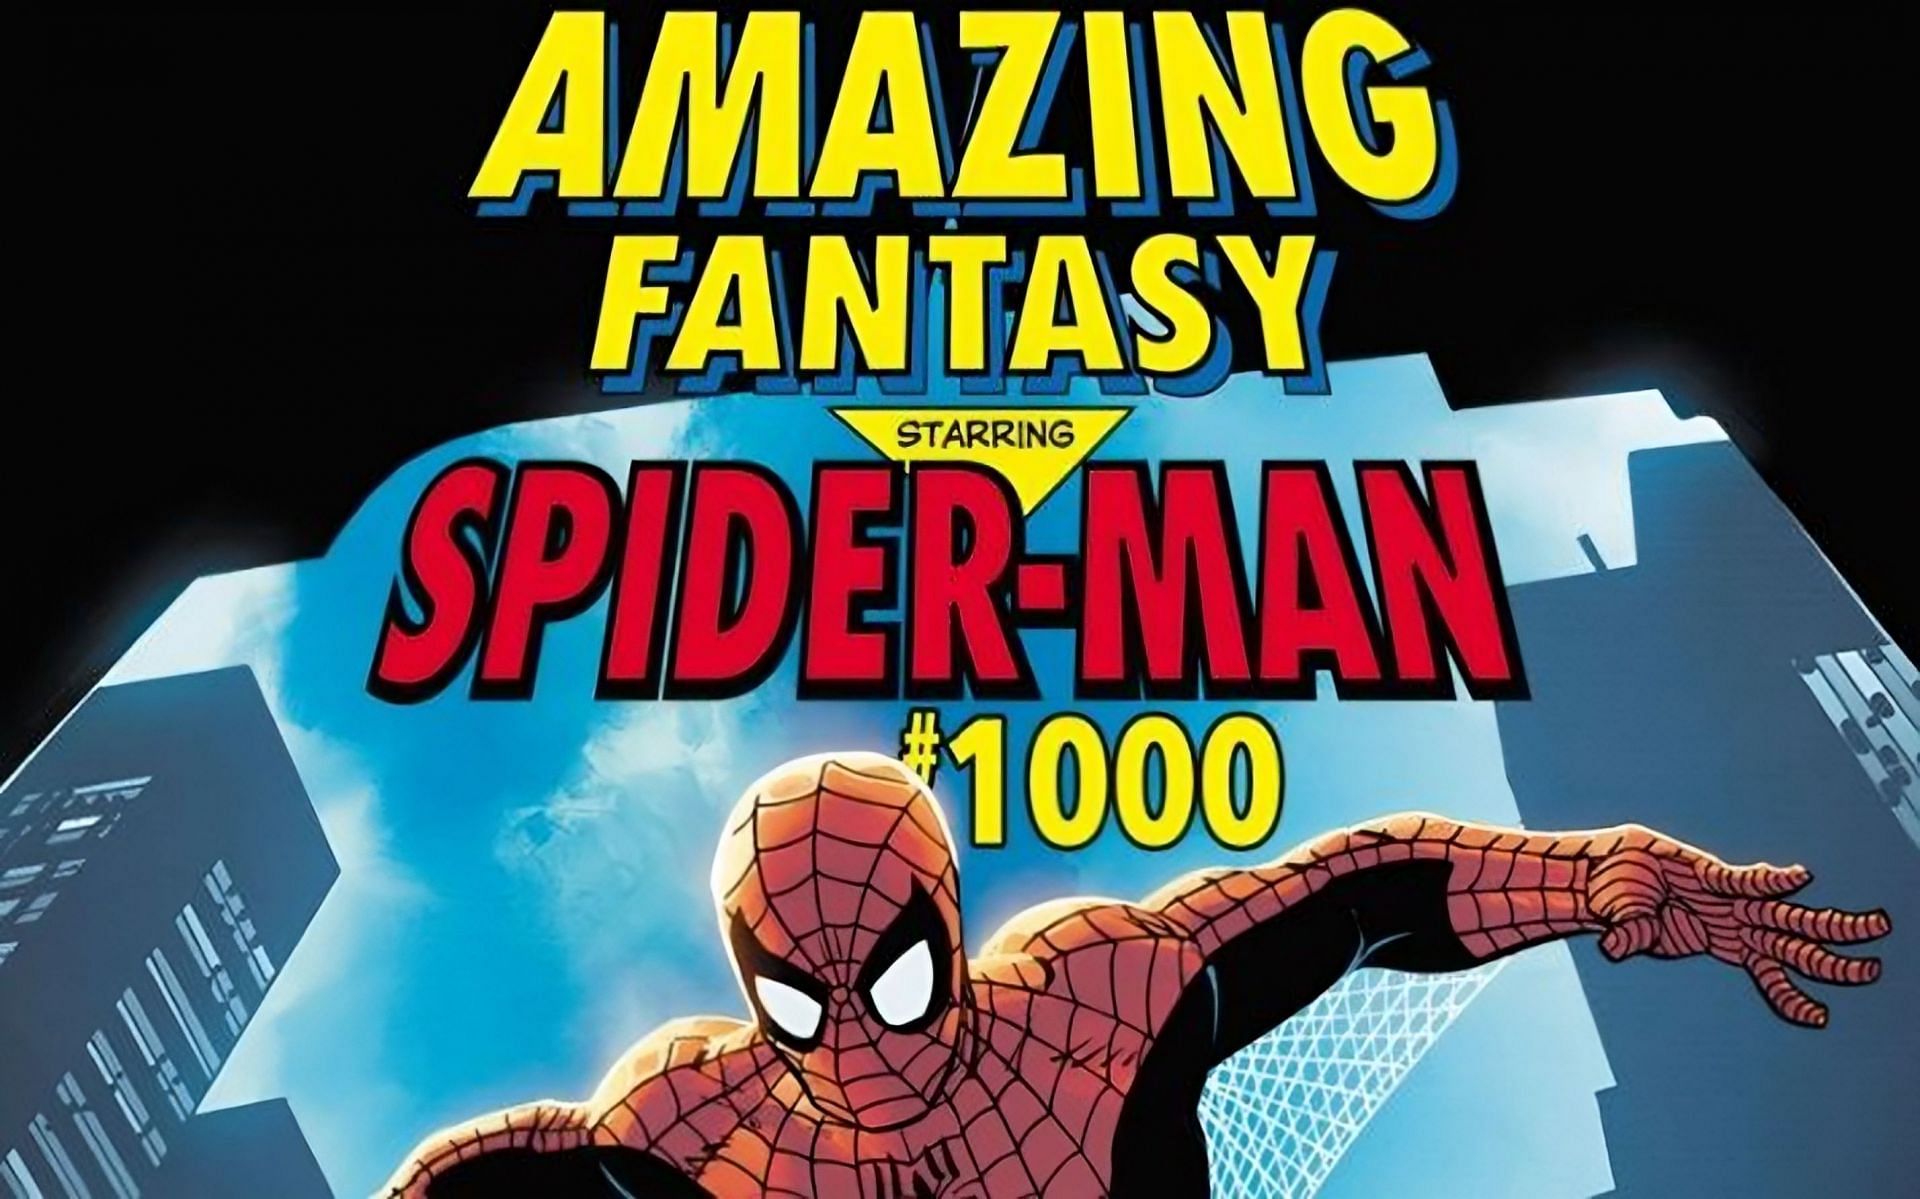 Amazing Fantasy #1000 comic cover (Image via Marvel Comics)